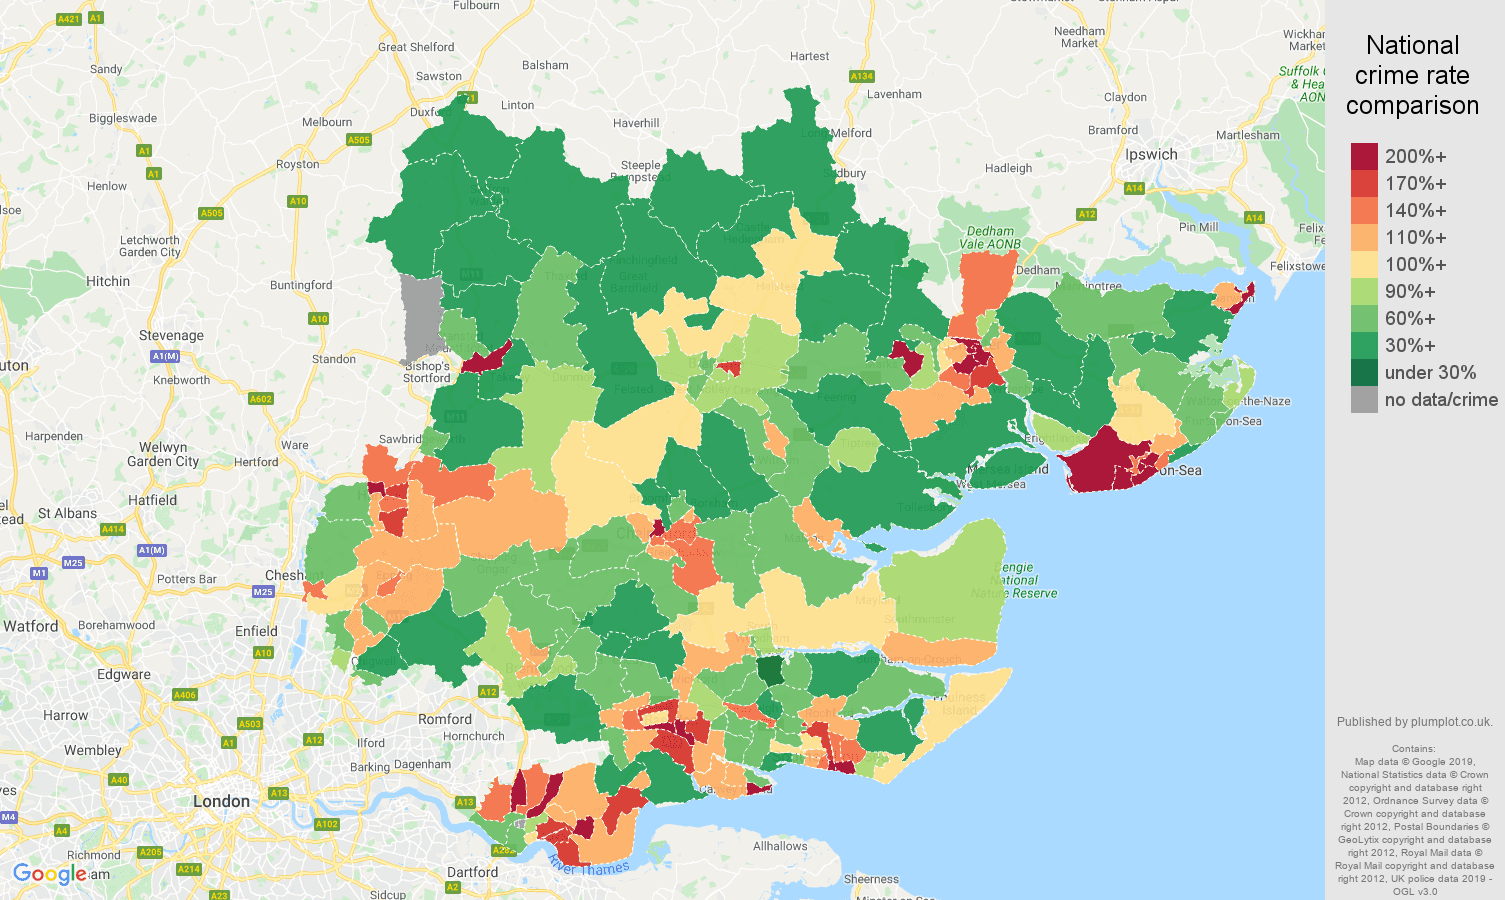 Essex public order crime rate comparison map